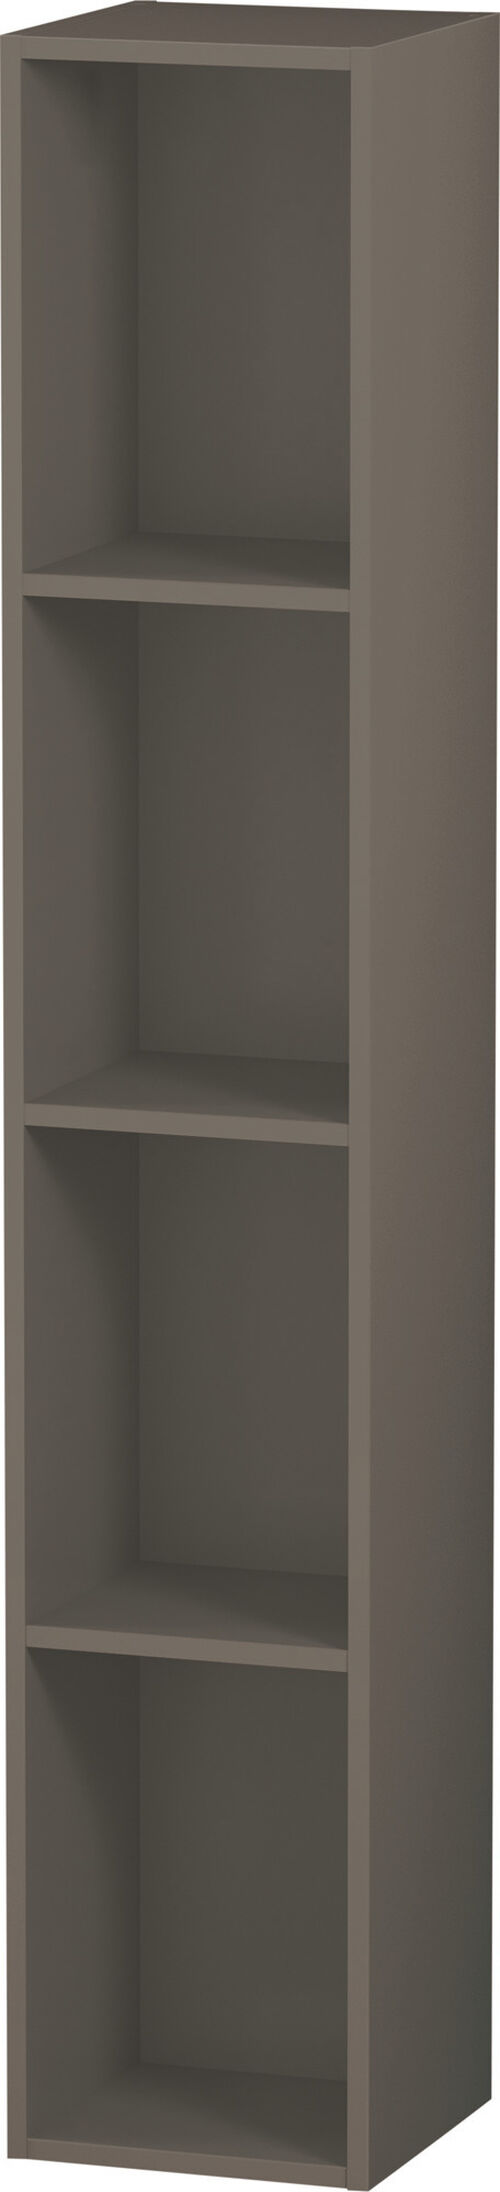 Elemento regale L-Cube flannel grey seta opaco